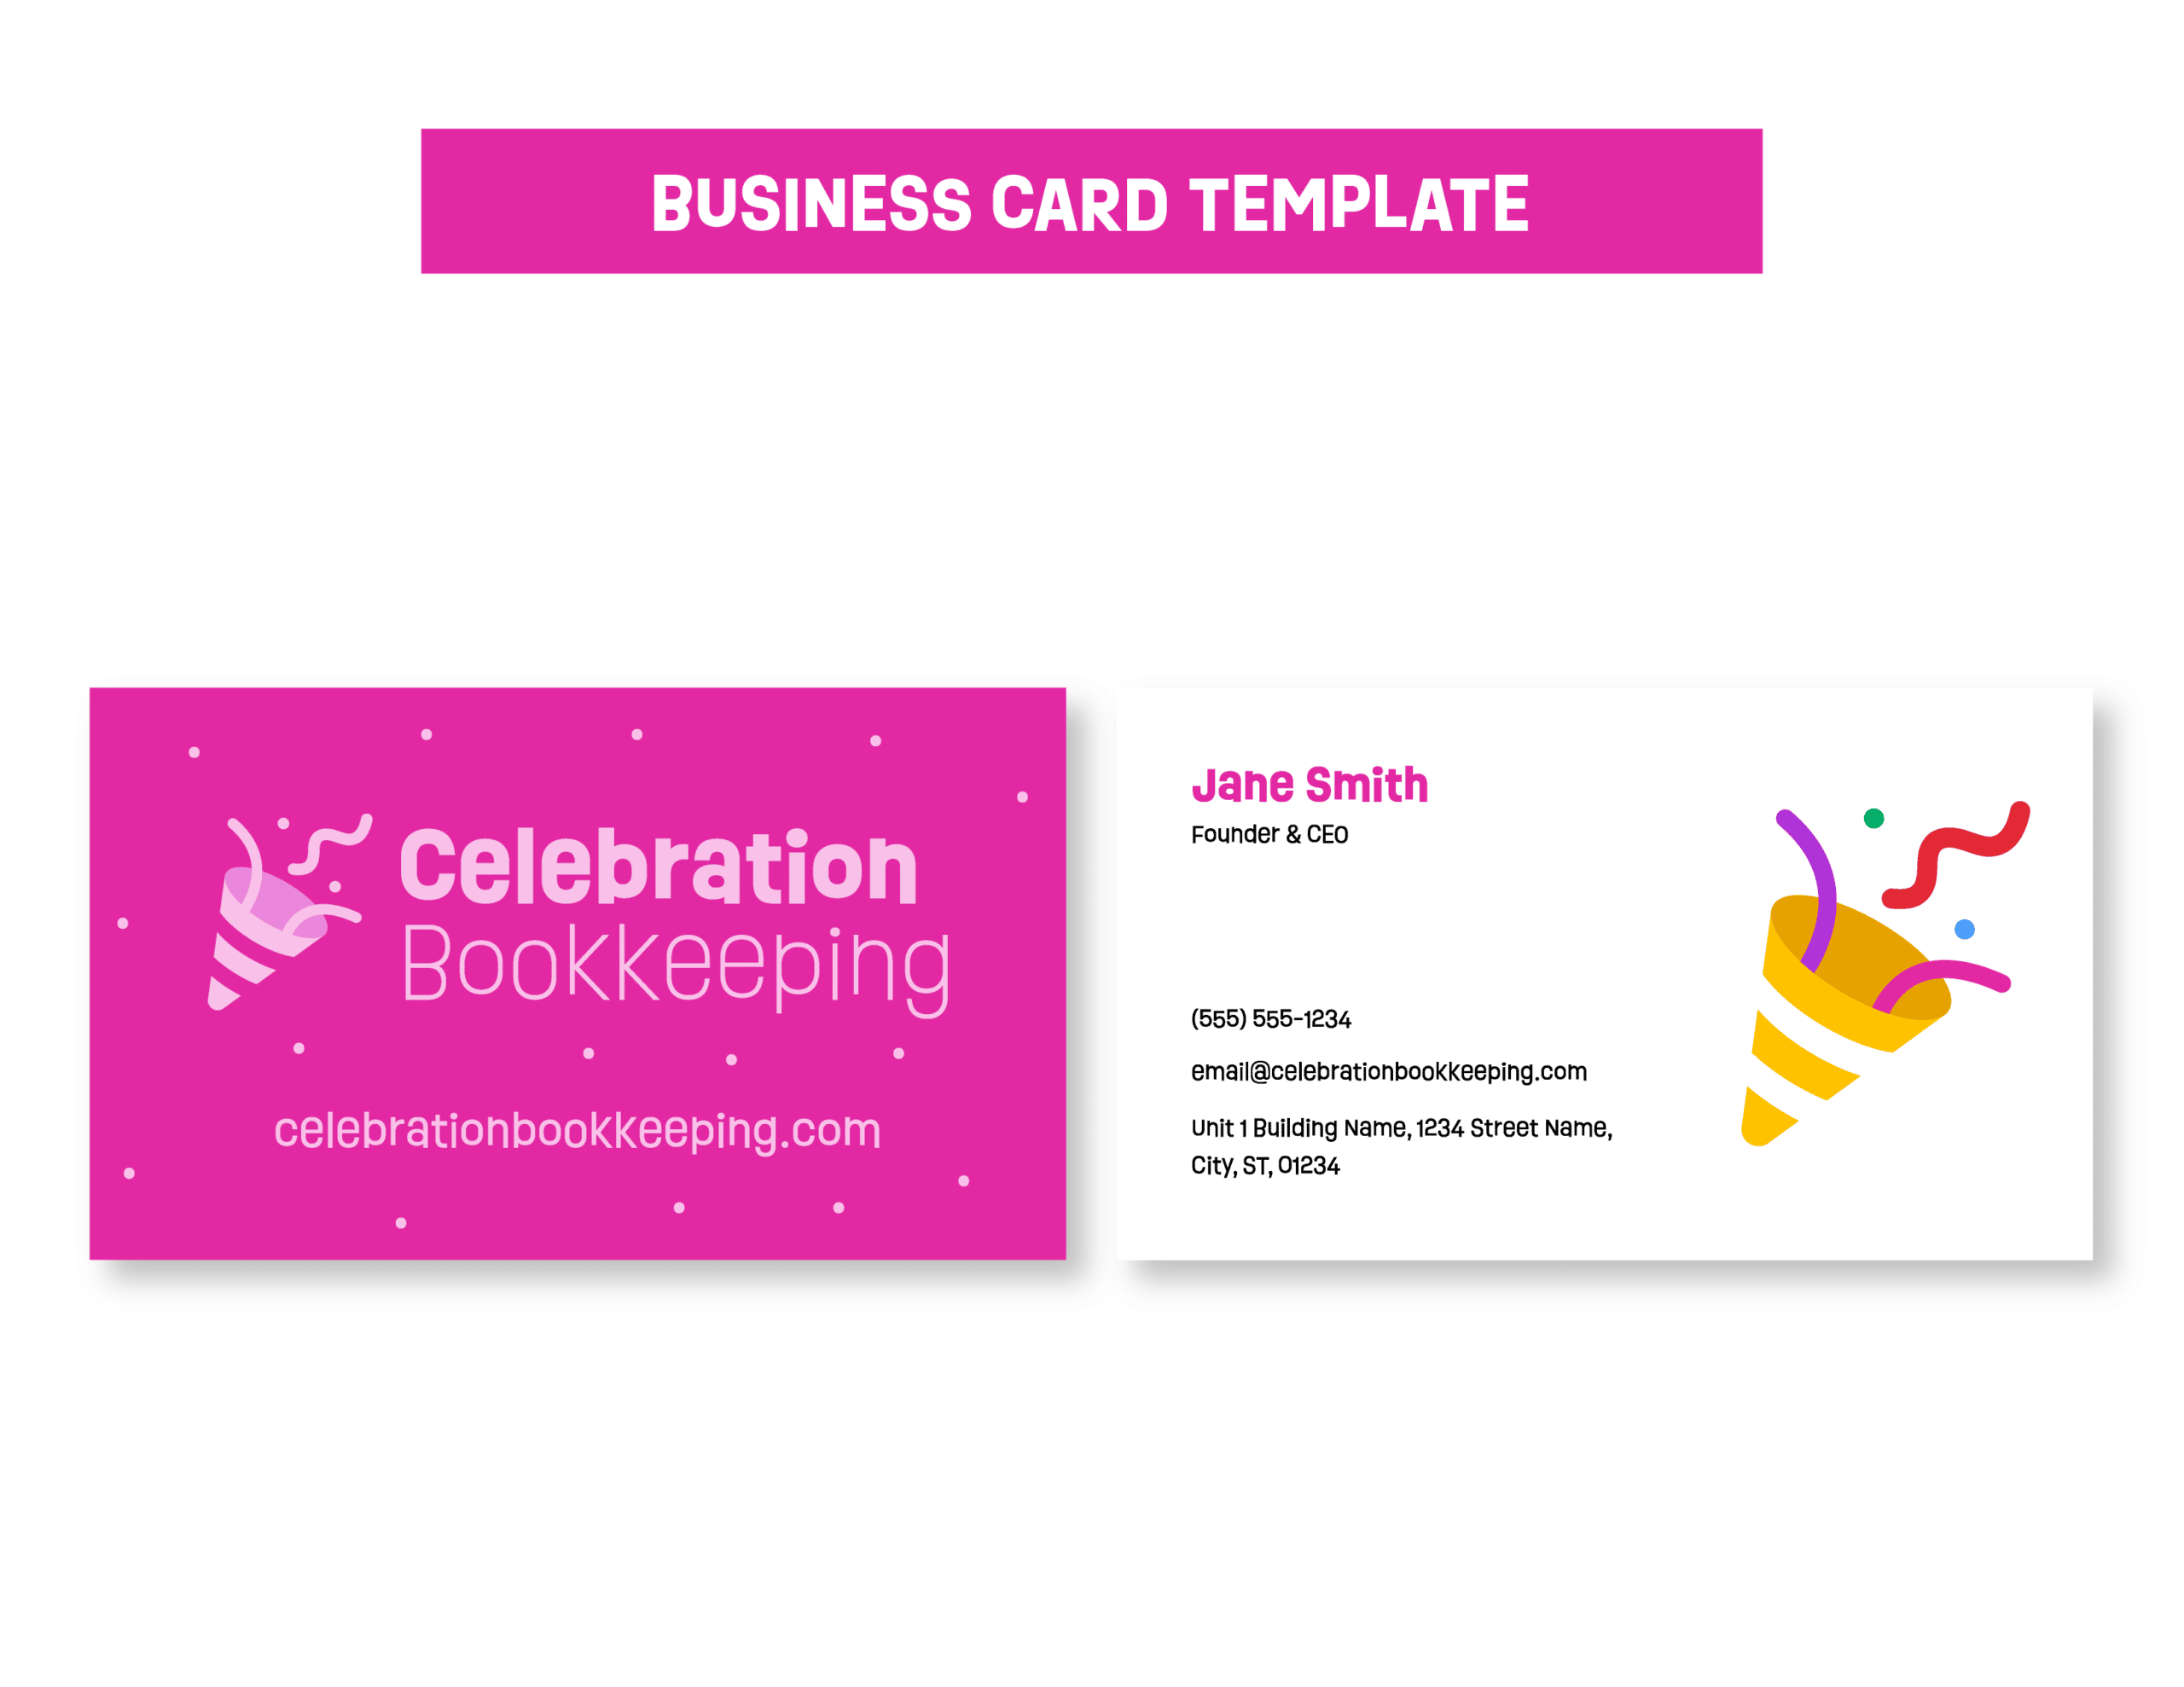 04CelebrationBK_Business Card Template